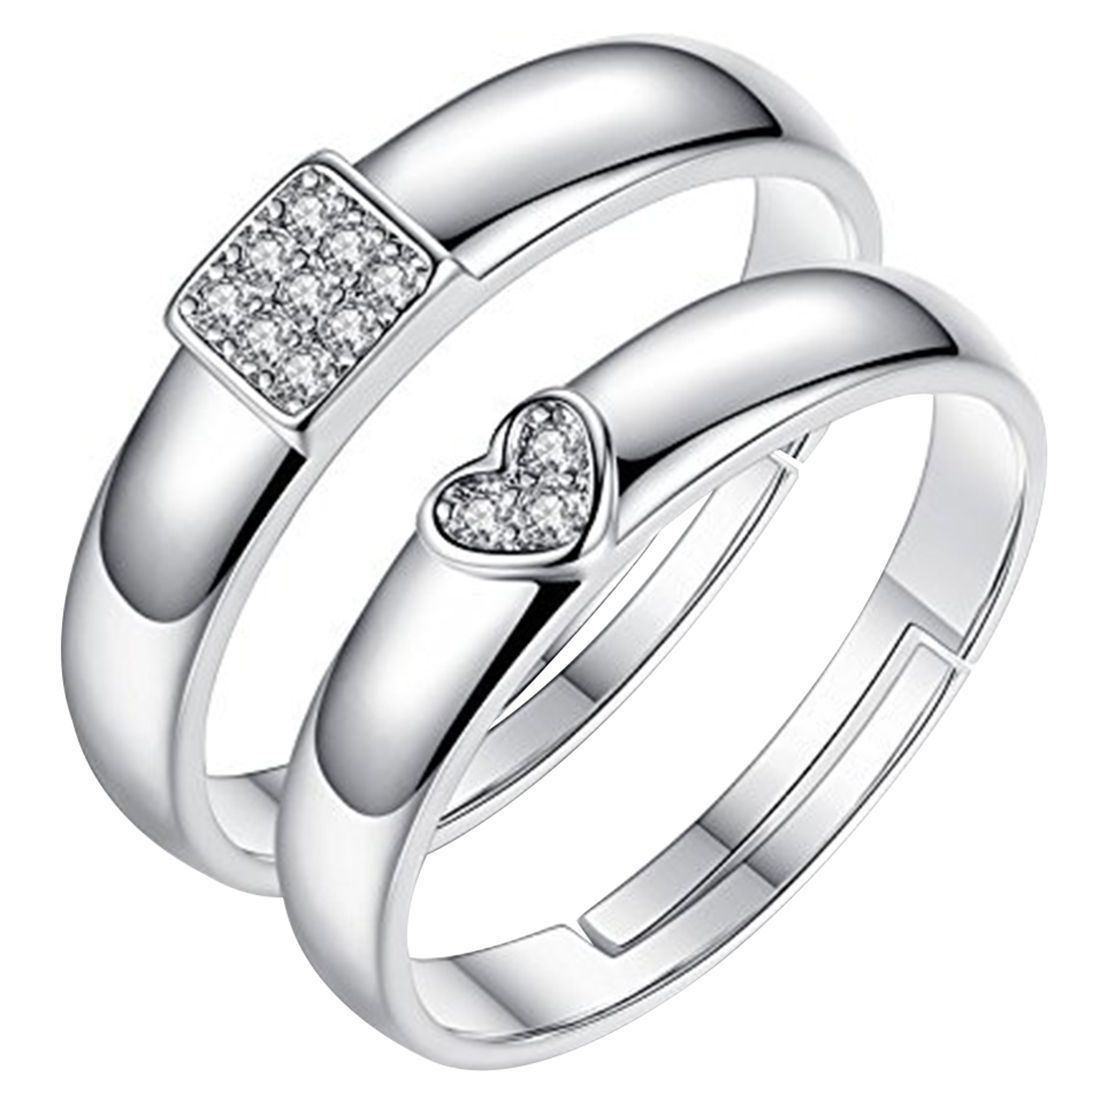 Buy Sterling Silver Wedding Ring Set, Wedding Bands, Engagement Ring,  Promise Ring, Alliance, Mens Silver Ring, Ocean Inspired Silver Ring Online  in India - Etsy